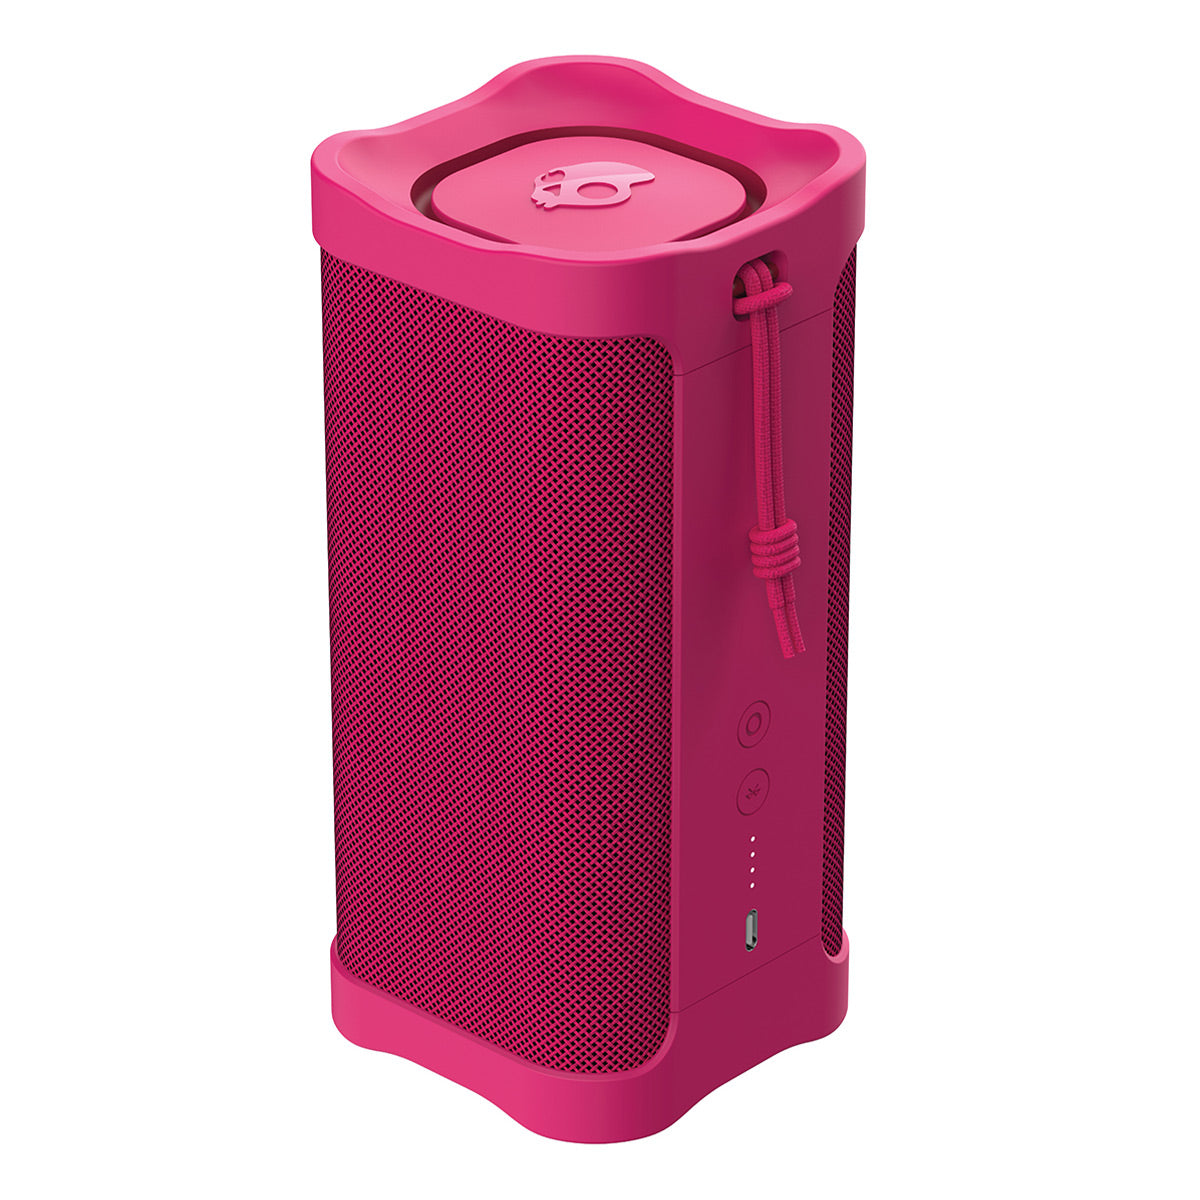 Skullcandy Terrain XL Waterproof Portable Bluetooth Speaker (Pink)